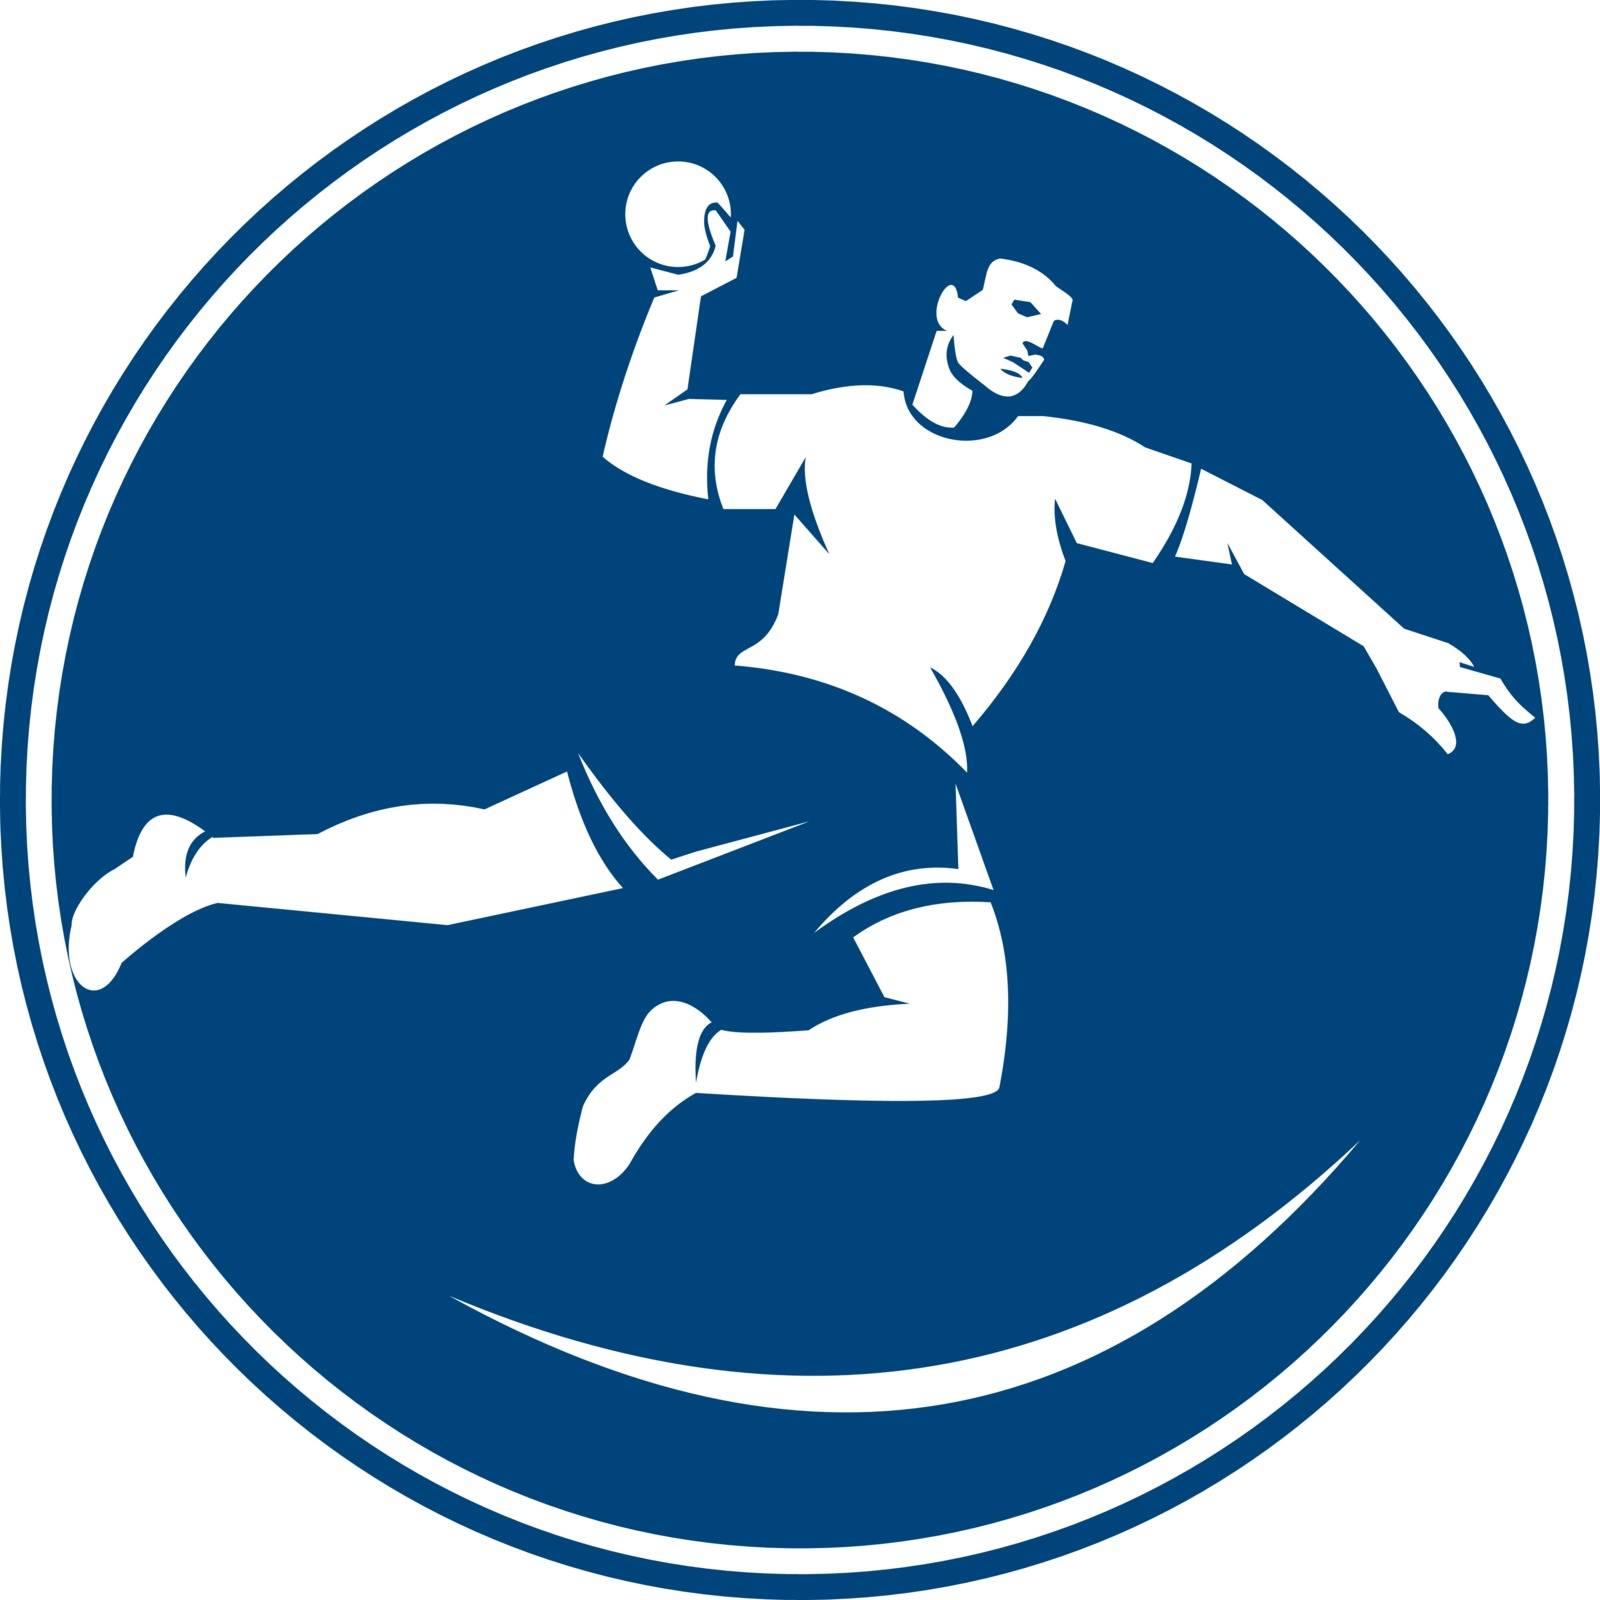 Handball Player Jumping Throwing Ball Icon by patrimonio